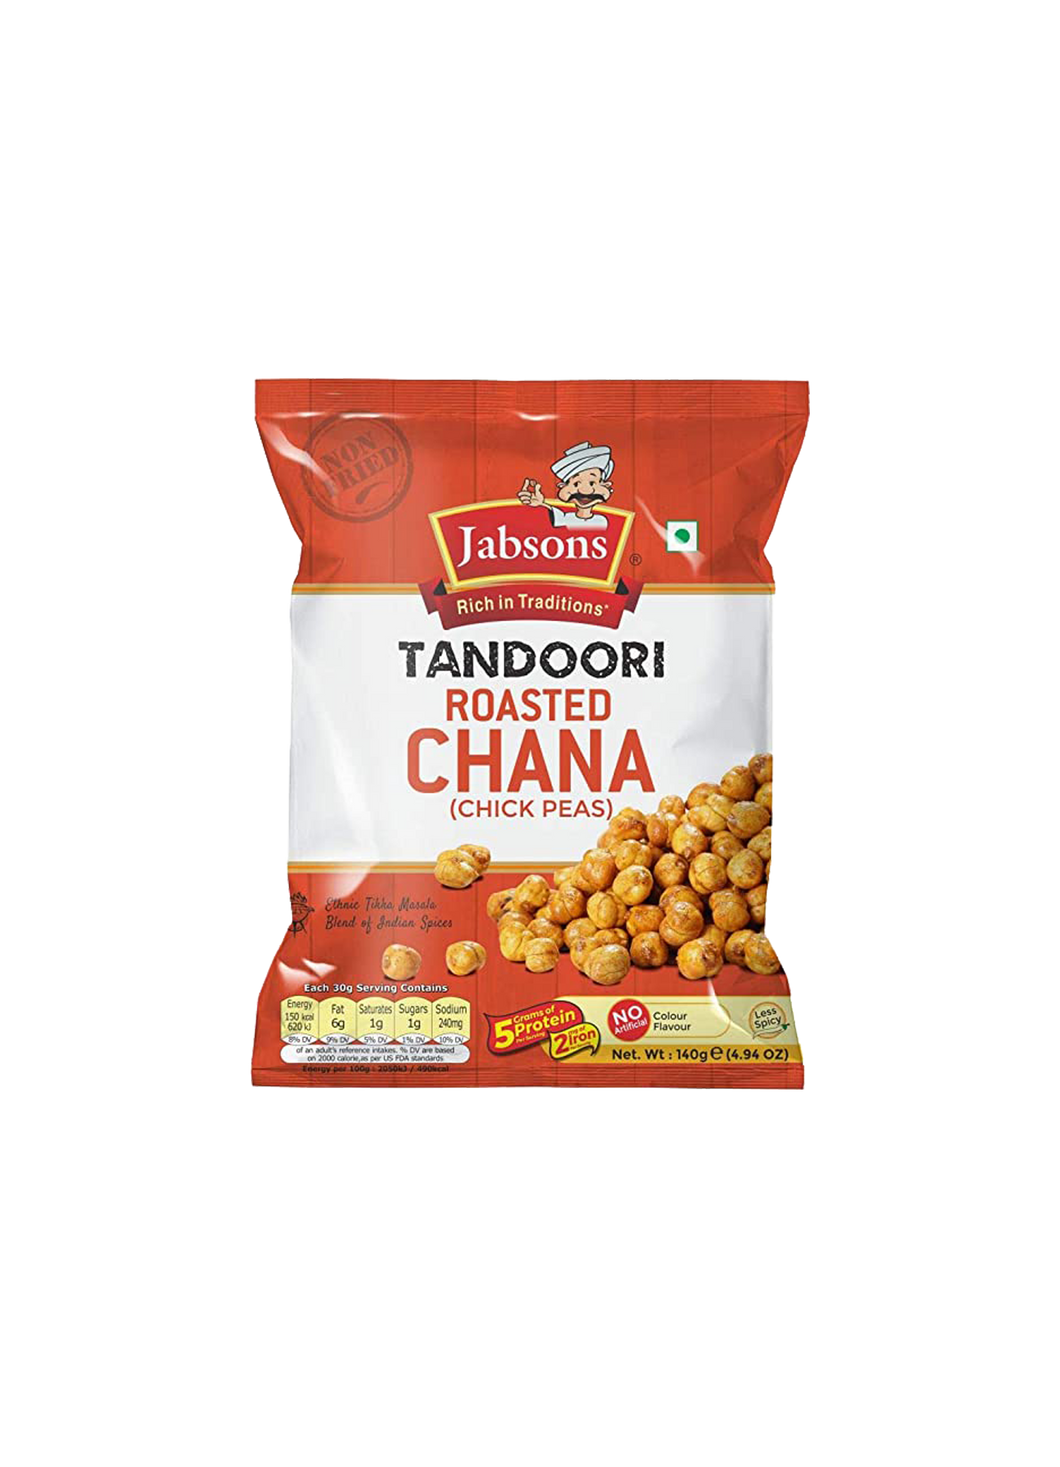 Jabsons Tandoori Roasted Chana (Chick Peas) 140g